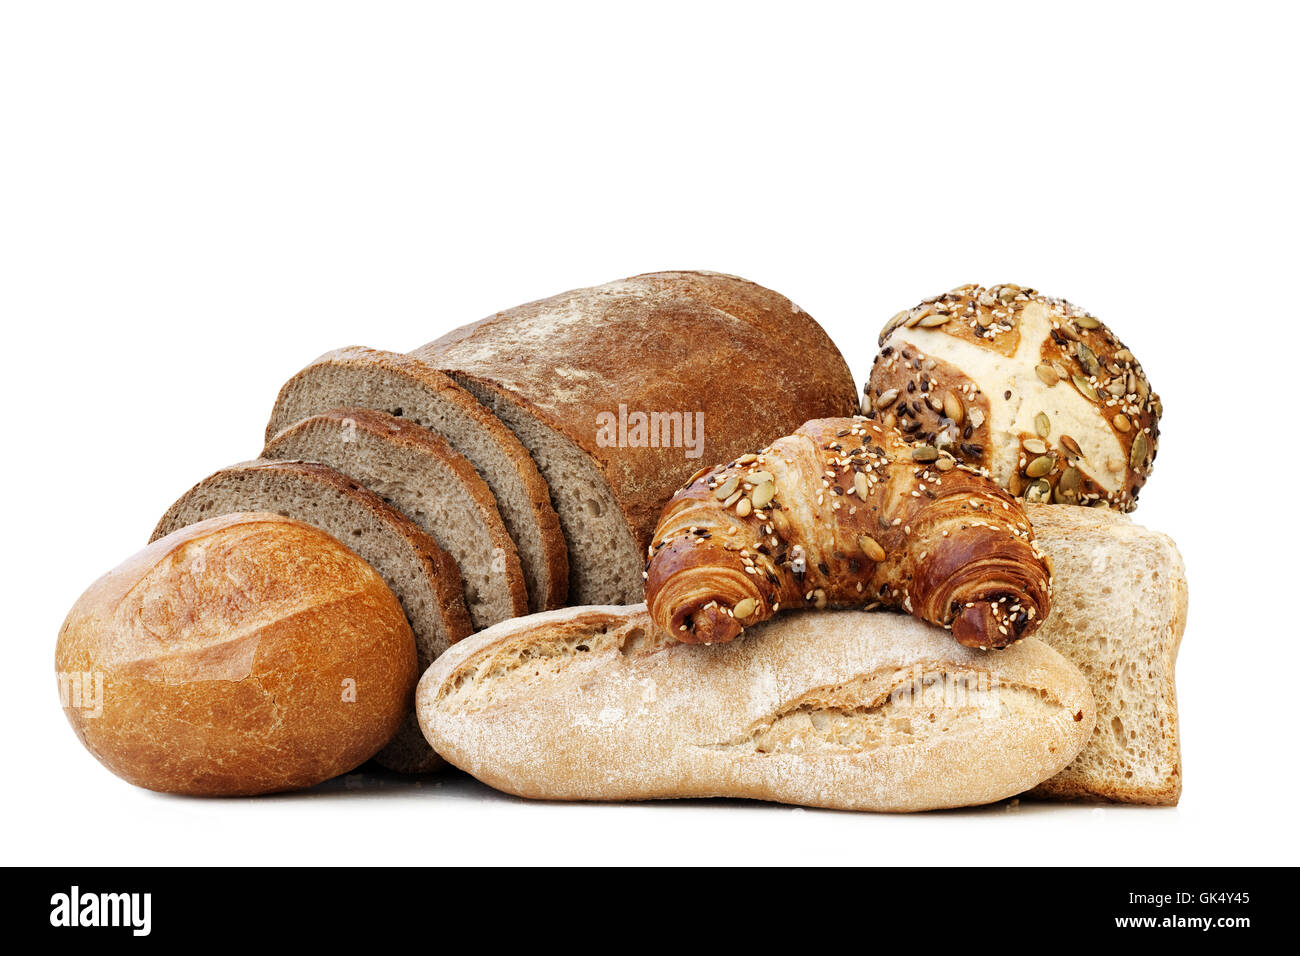 bread bun baked Stock Photo